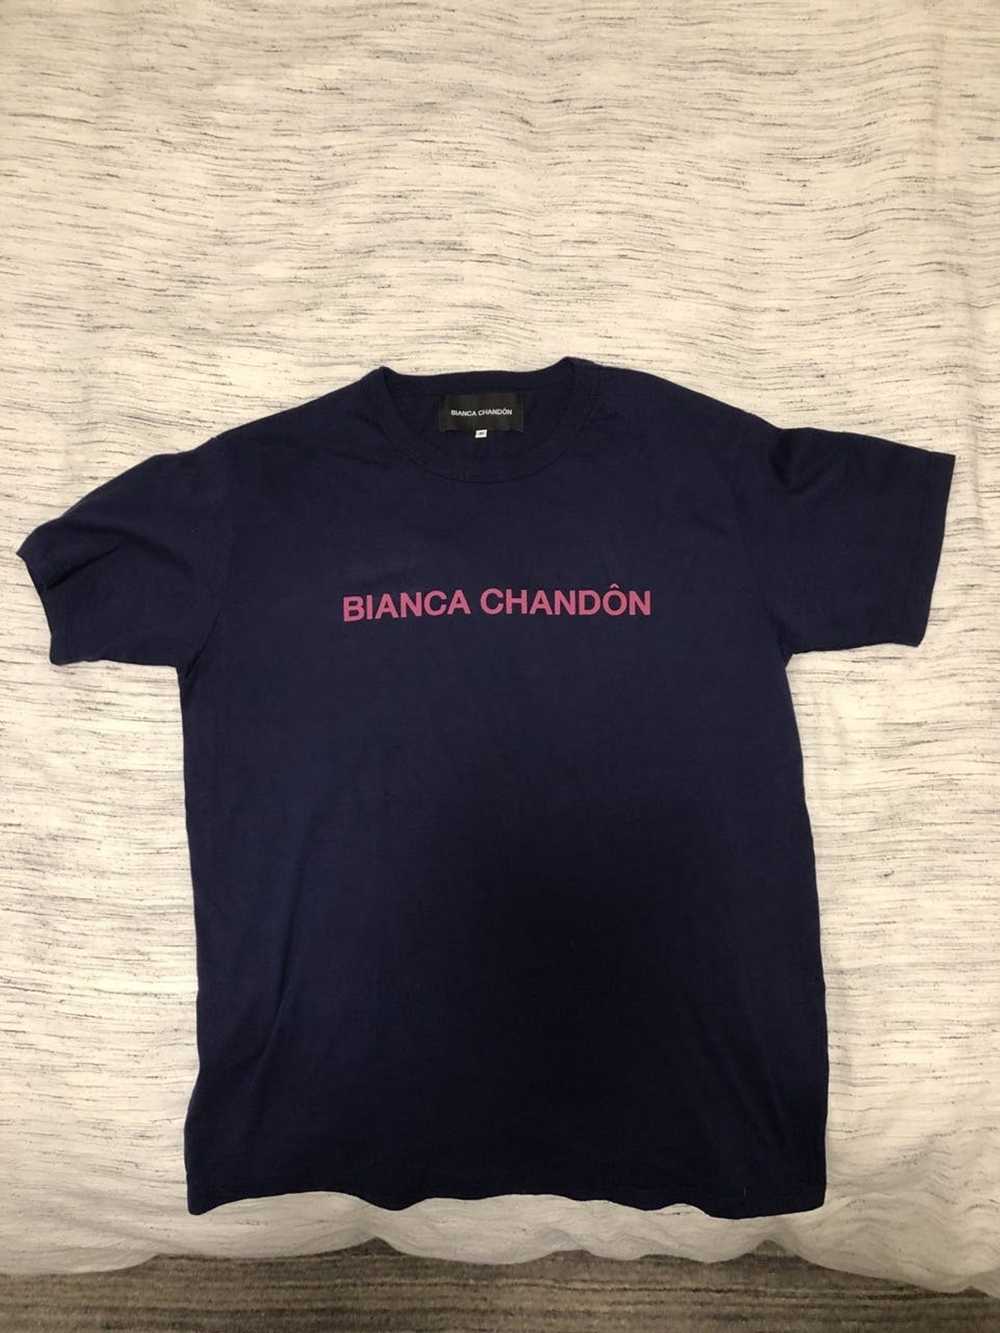 Bianca Chandon Bianca Chandon Logo Tee - image 1